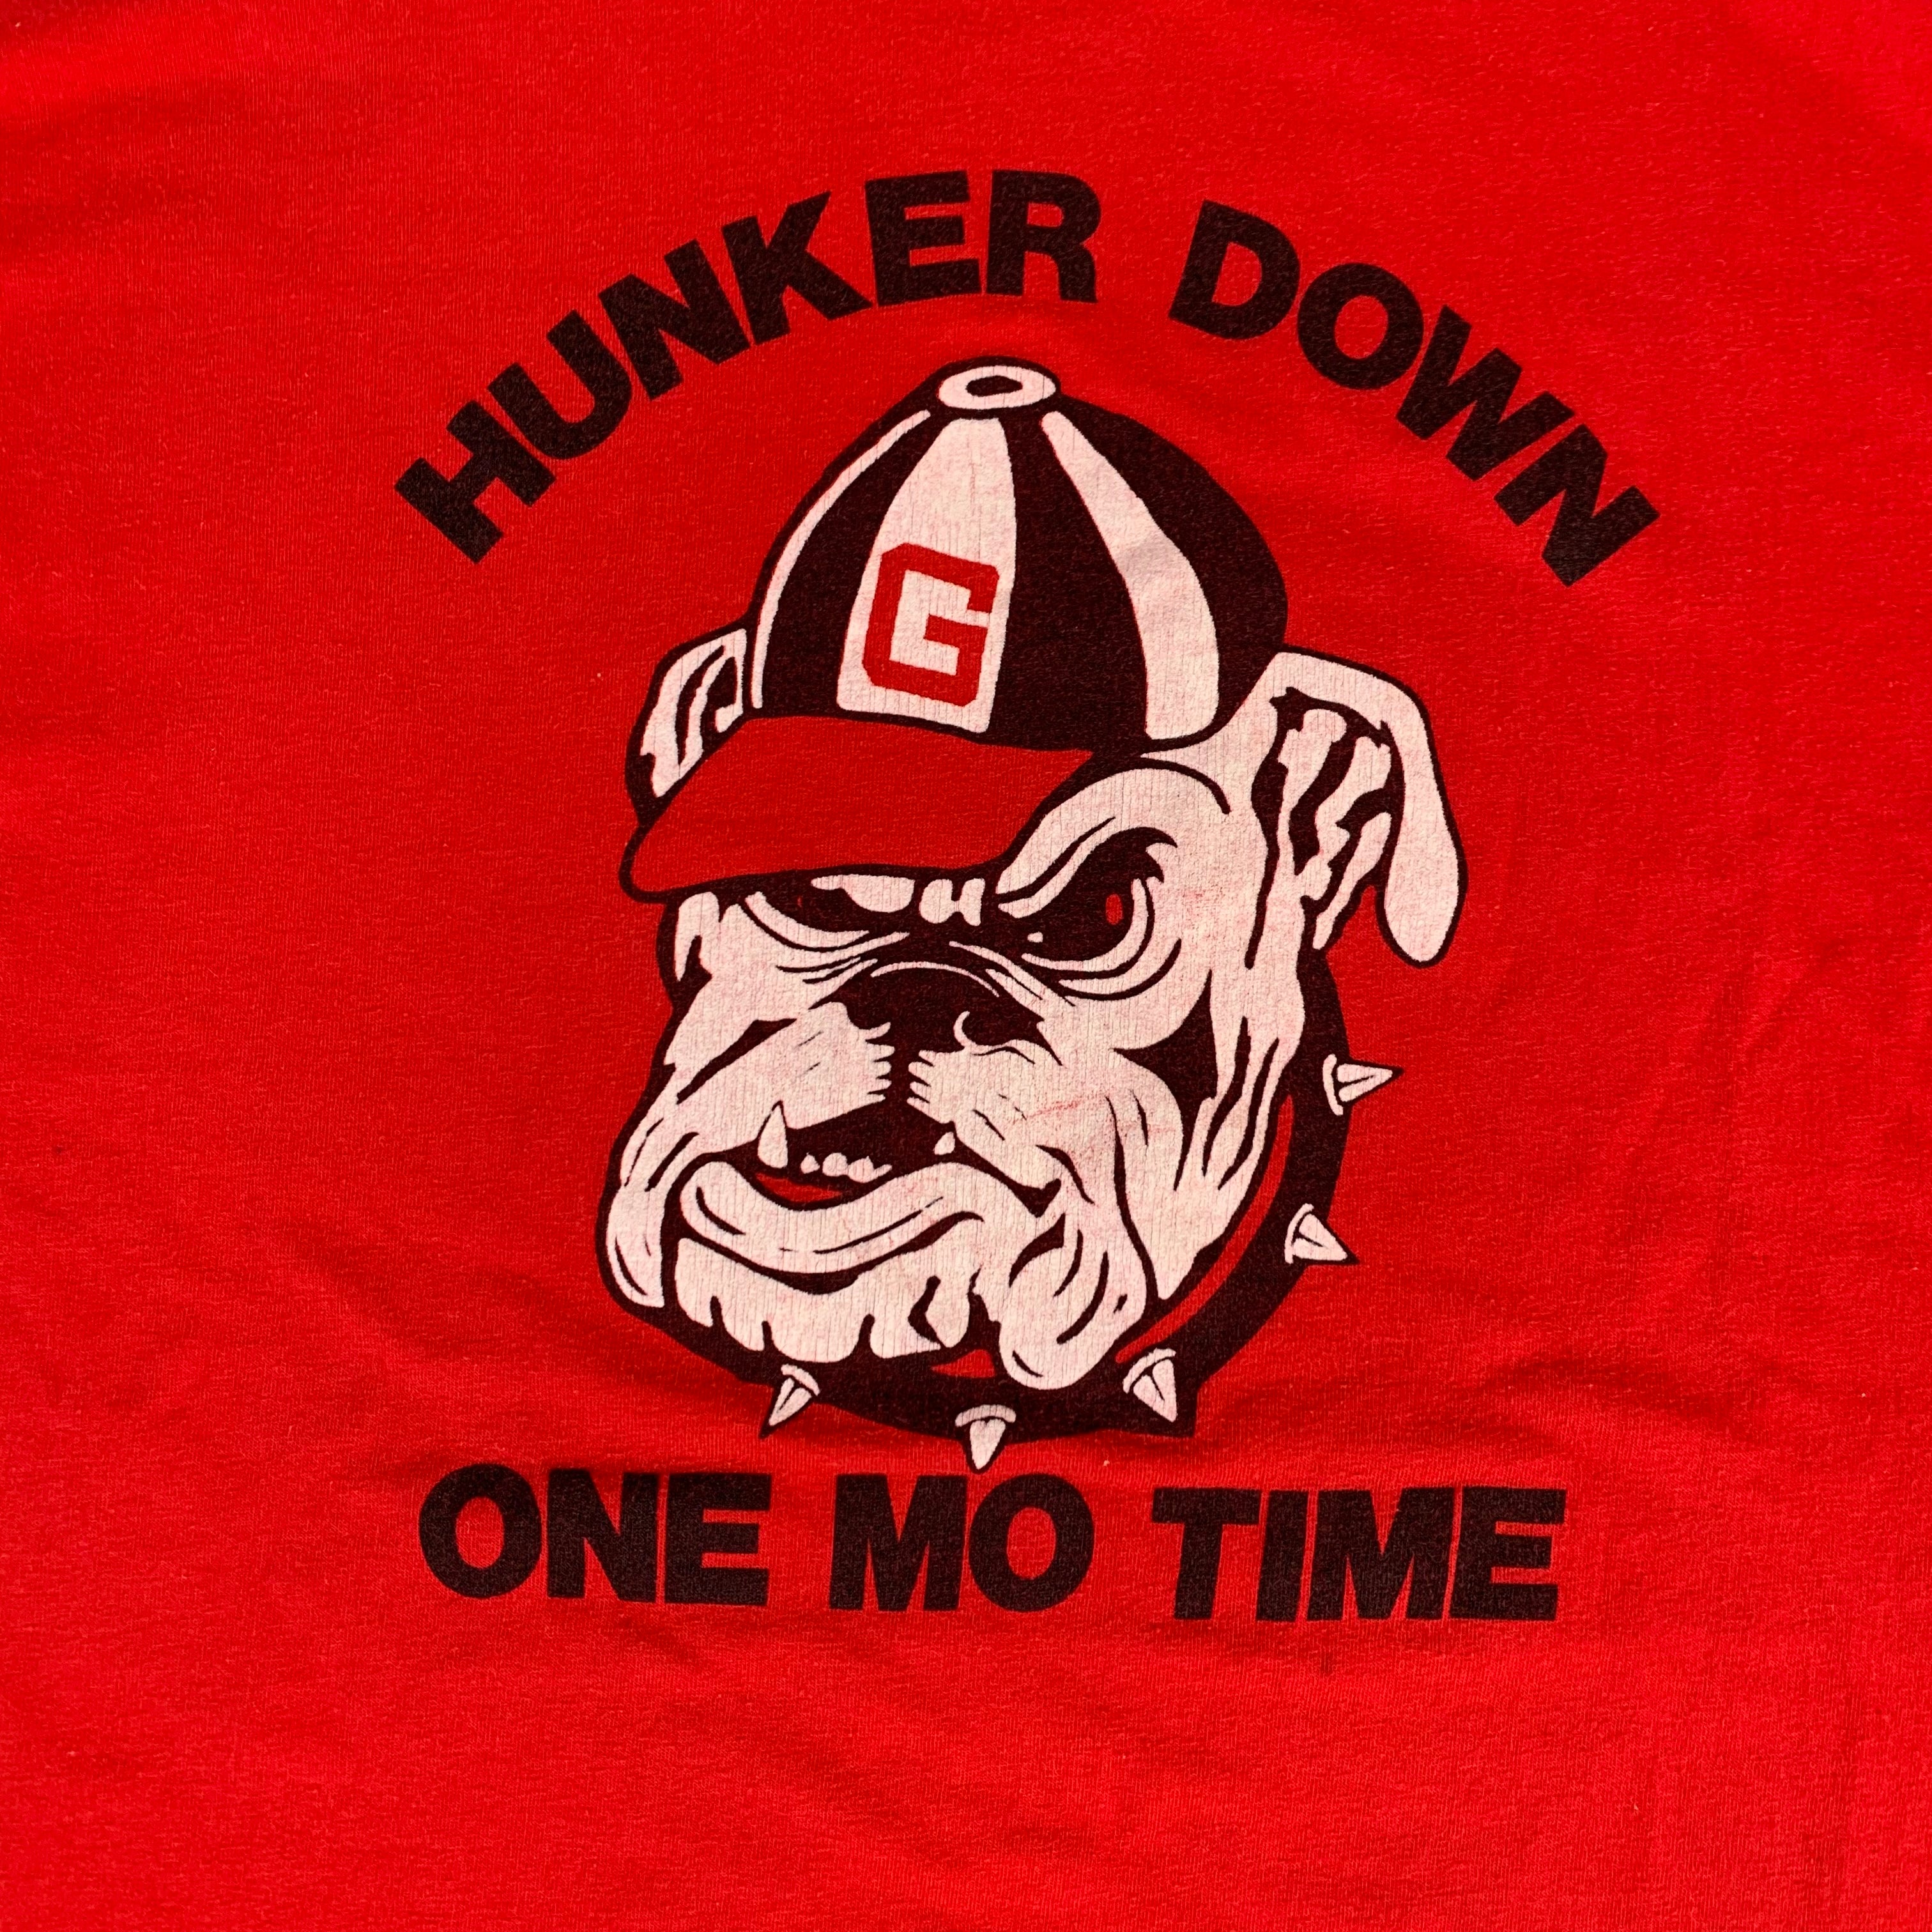 Georgia Bulldogs Shirt Archives - Memshirts